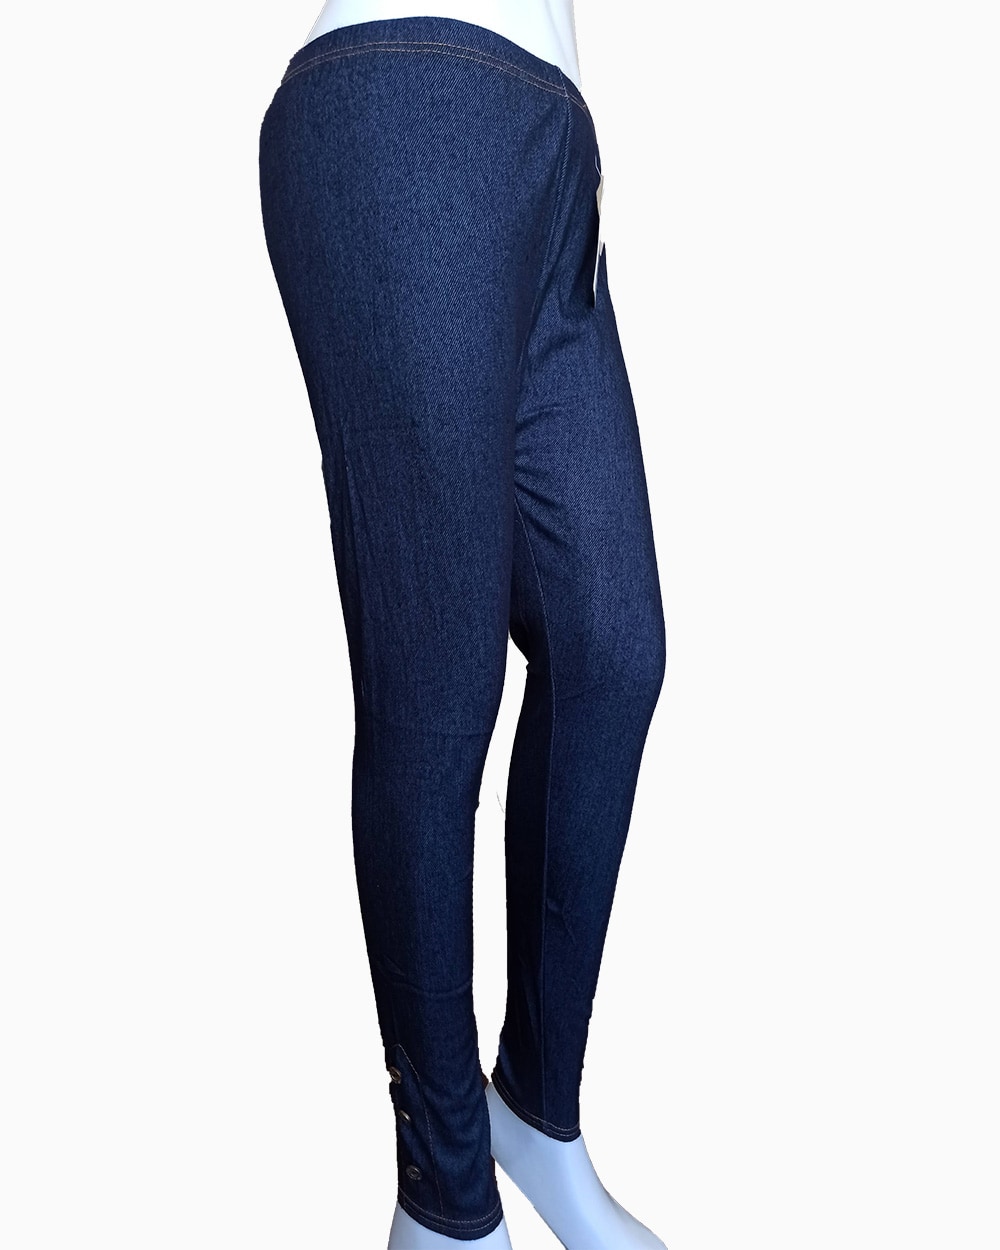 denim leggings-button line on bottom-stretchable comfortable-blue plain tights (3)